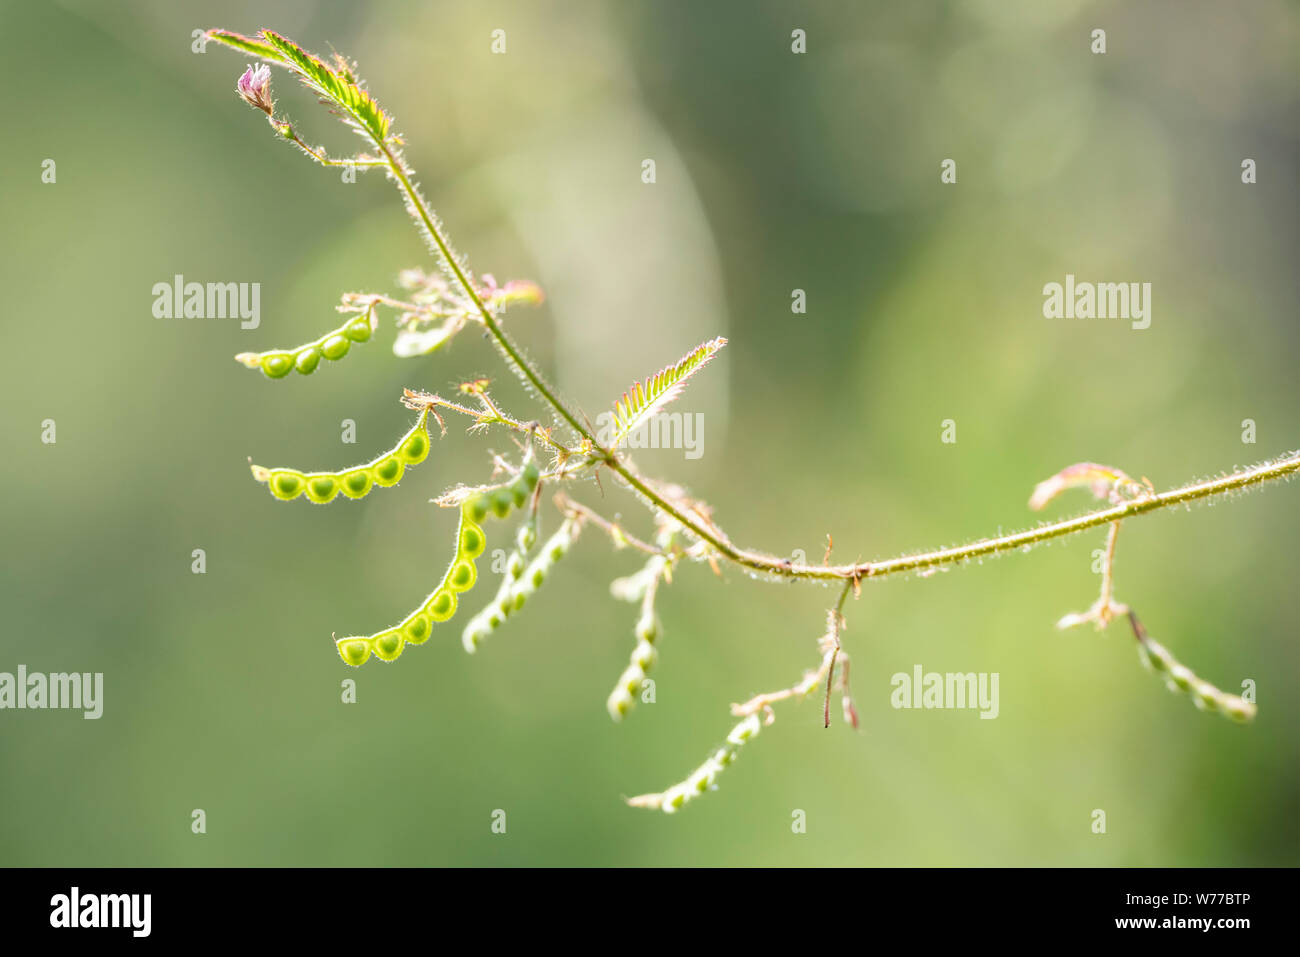 Aeschynomene americana plant close-up in natural light. Thailand, Koh Chang Island. Stock Photo